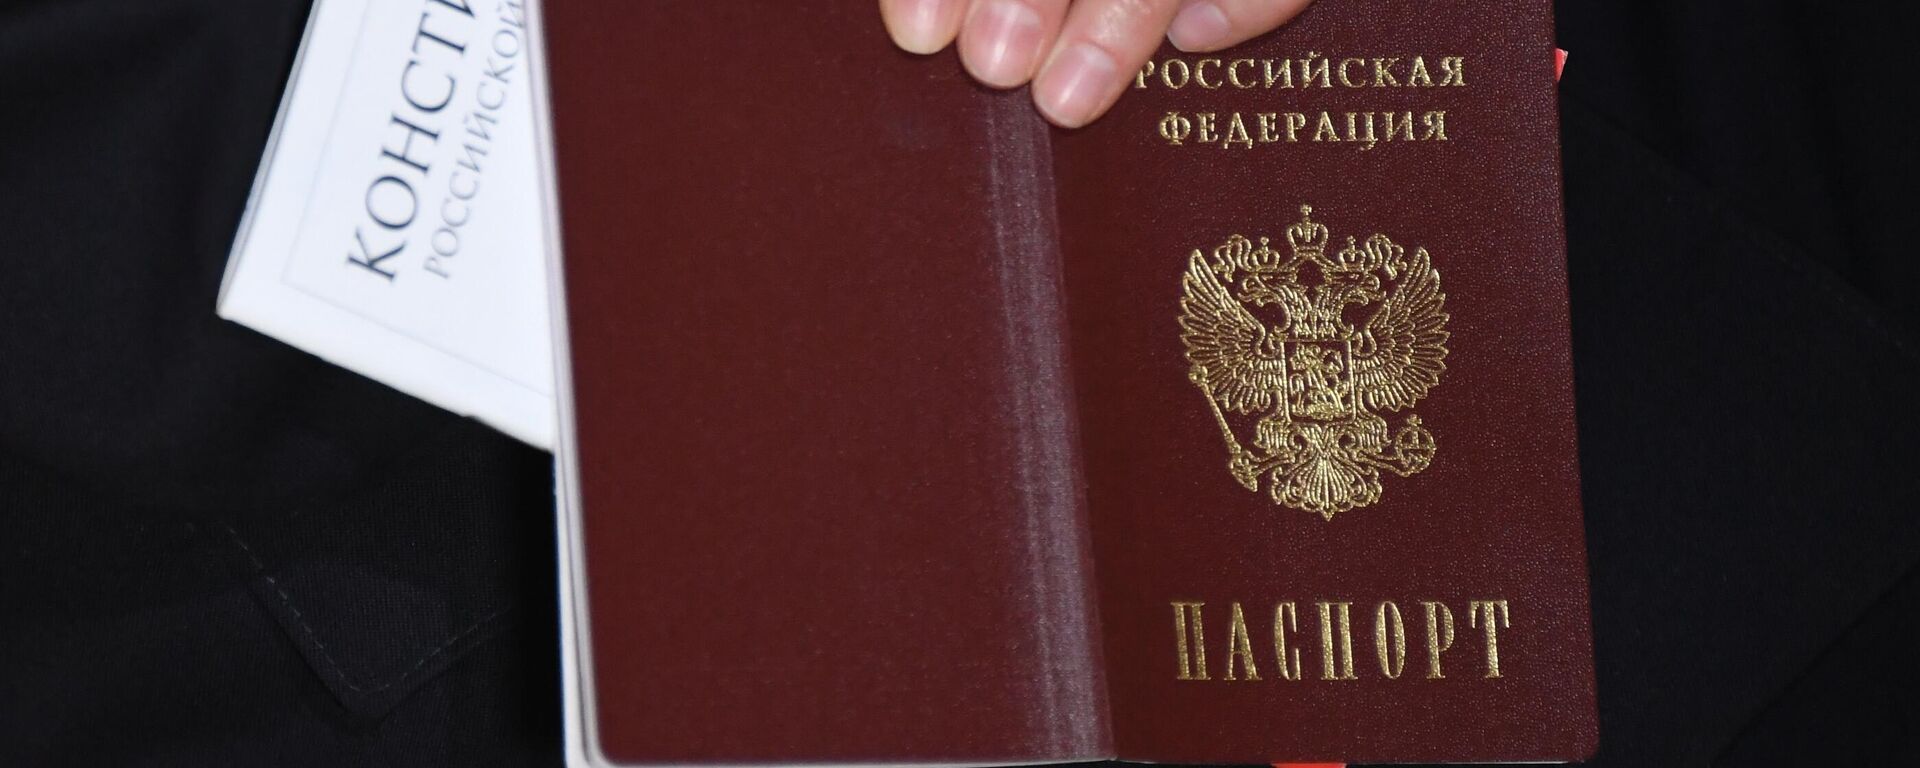 Паспорт гражданина РФ и Конституция РФ - Sputnik Узбекистан, 1920, 01.02.2021